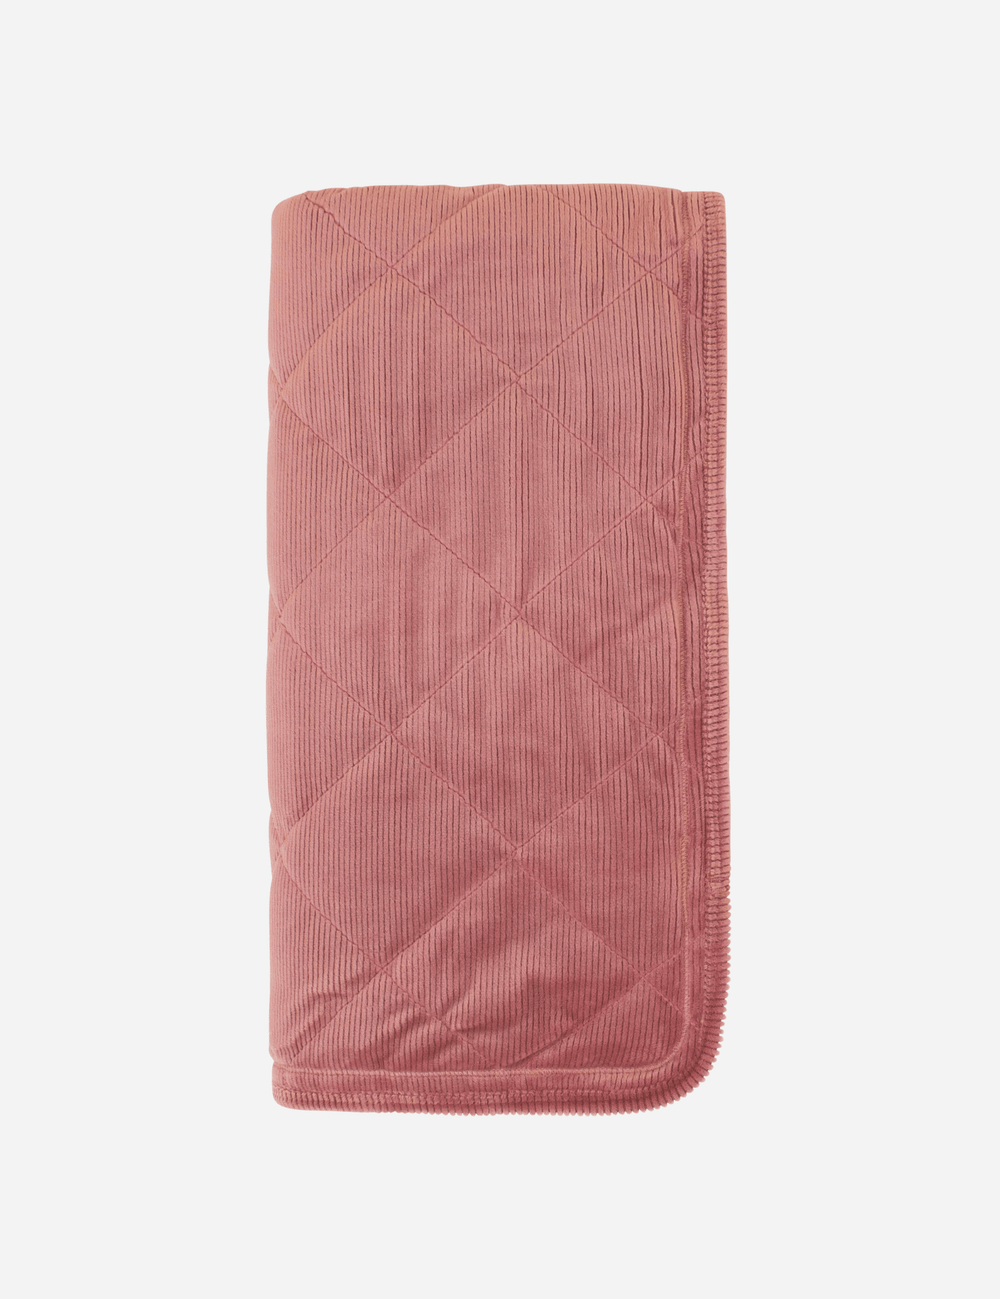 Ruffle Collar Blanket - Mauve